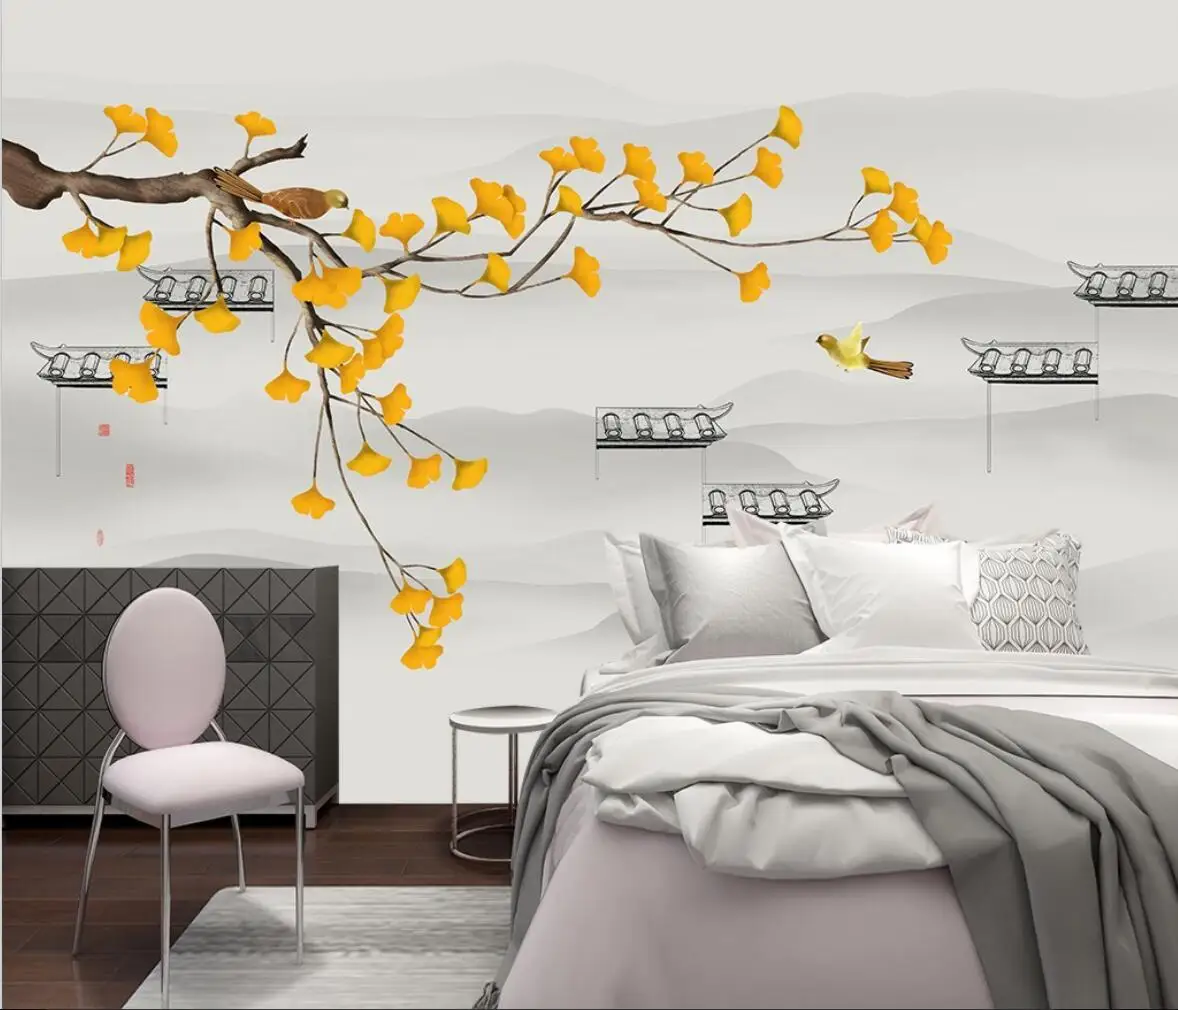 beibehang מותאם אישית גינקו בילובה פרחים, ציפורים טפט תמונה ציורי קיר טפטים לסלון חדר שינה עיצוב הבית ציור קיר - 1